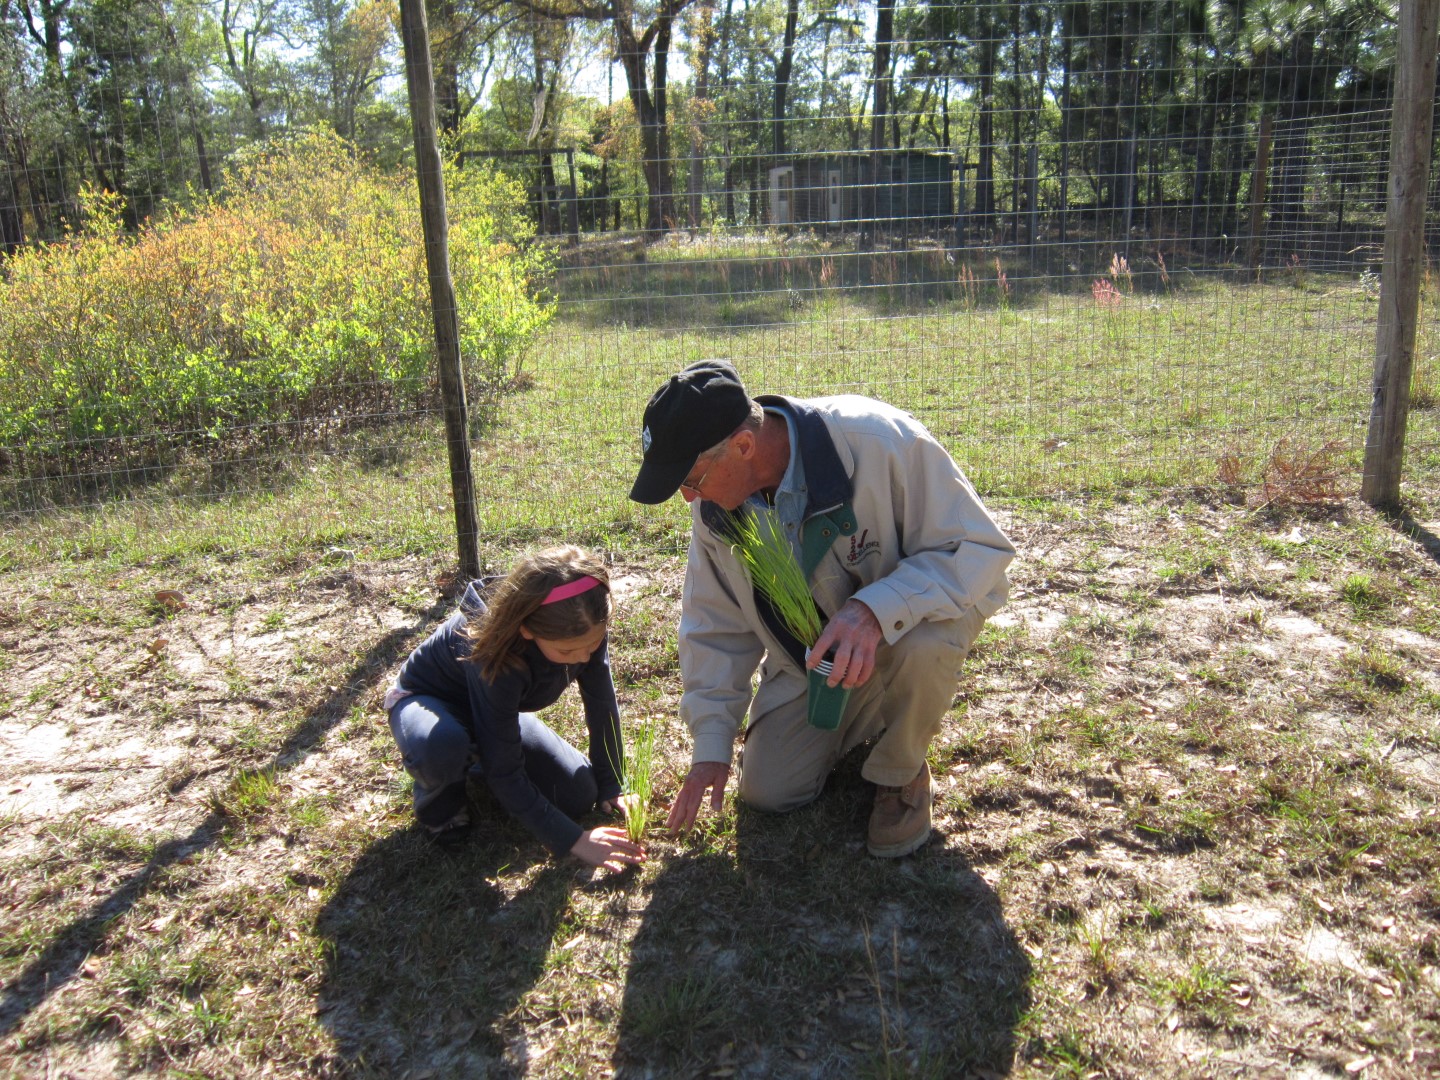 Helping grandparents plant trees